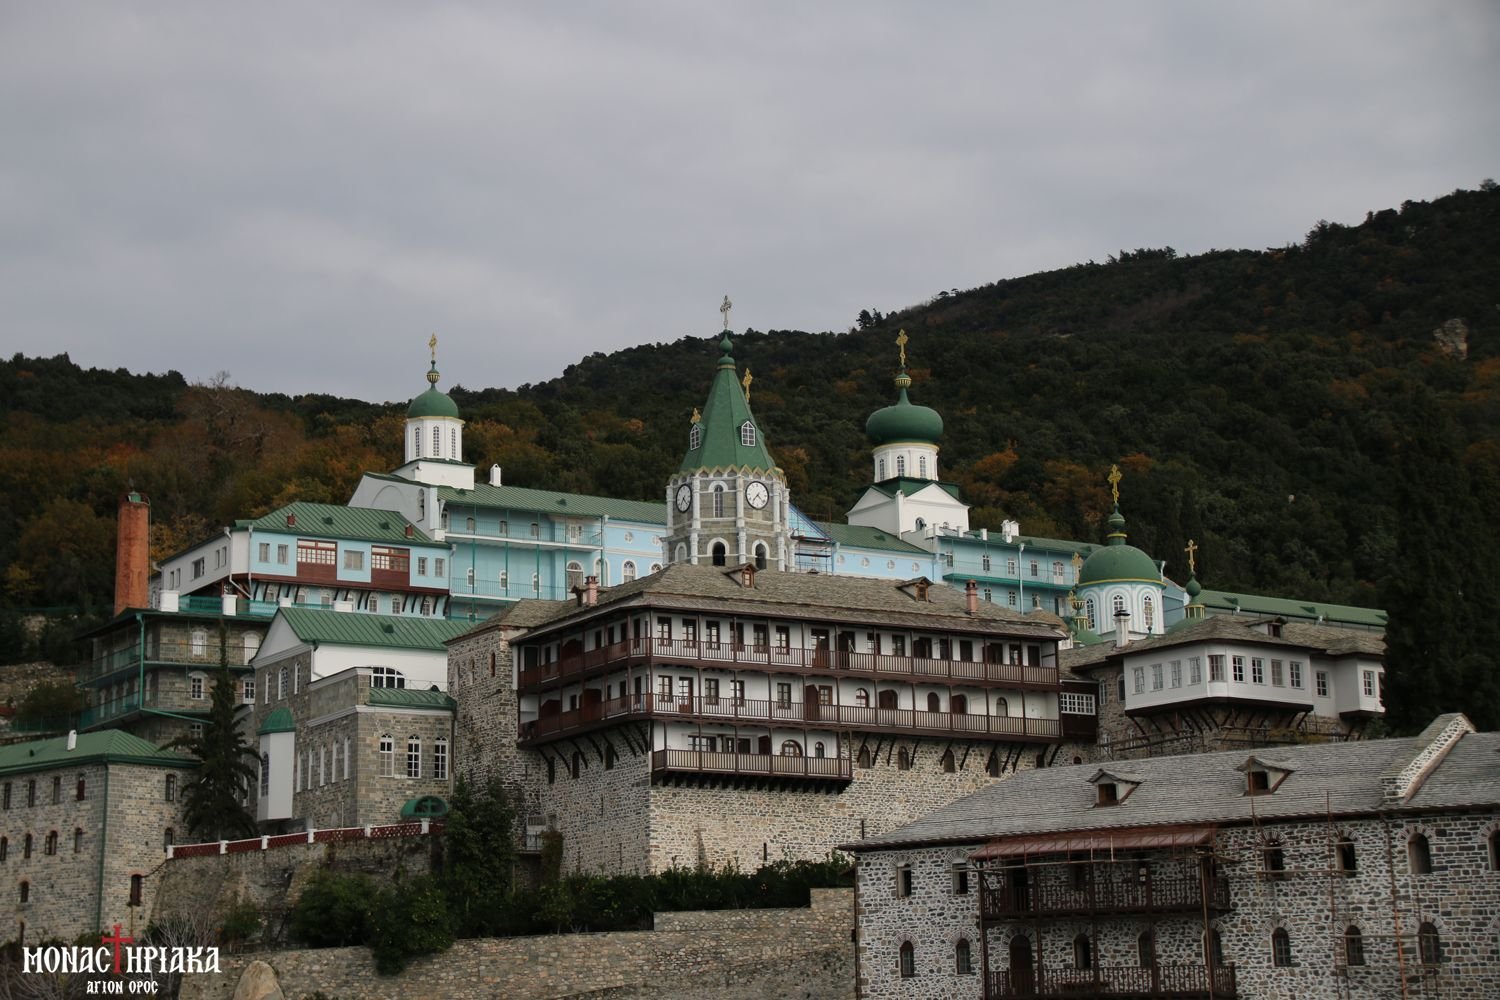 Saint Panteleimon Monastery: the Russian monastery